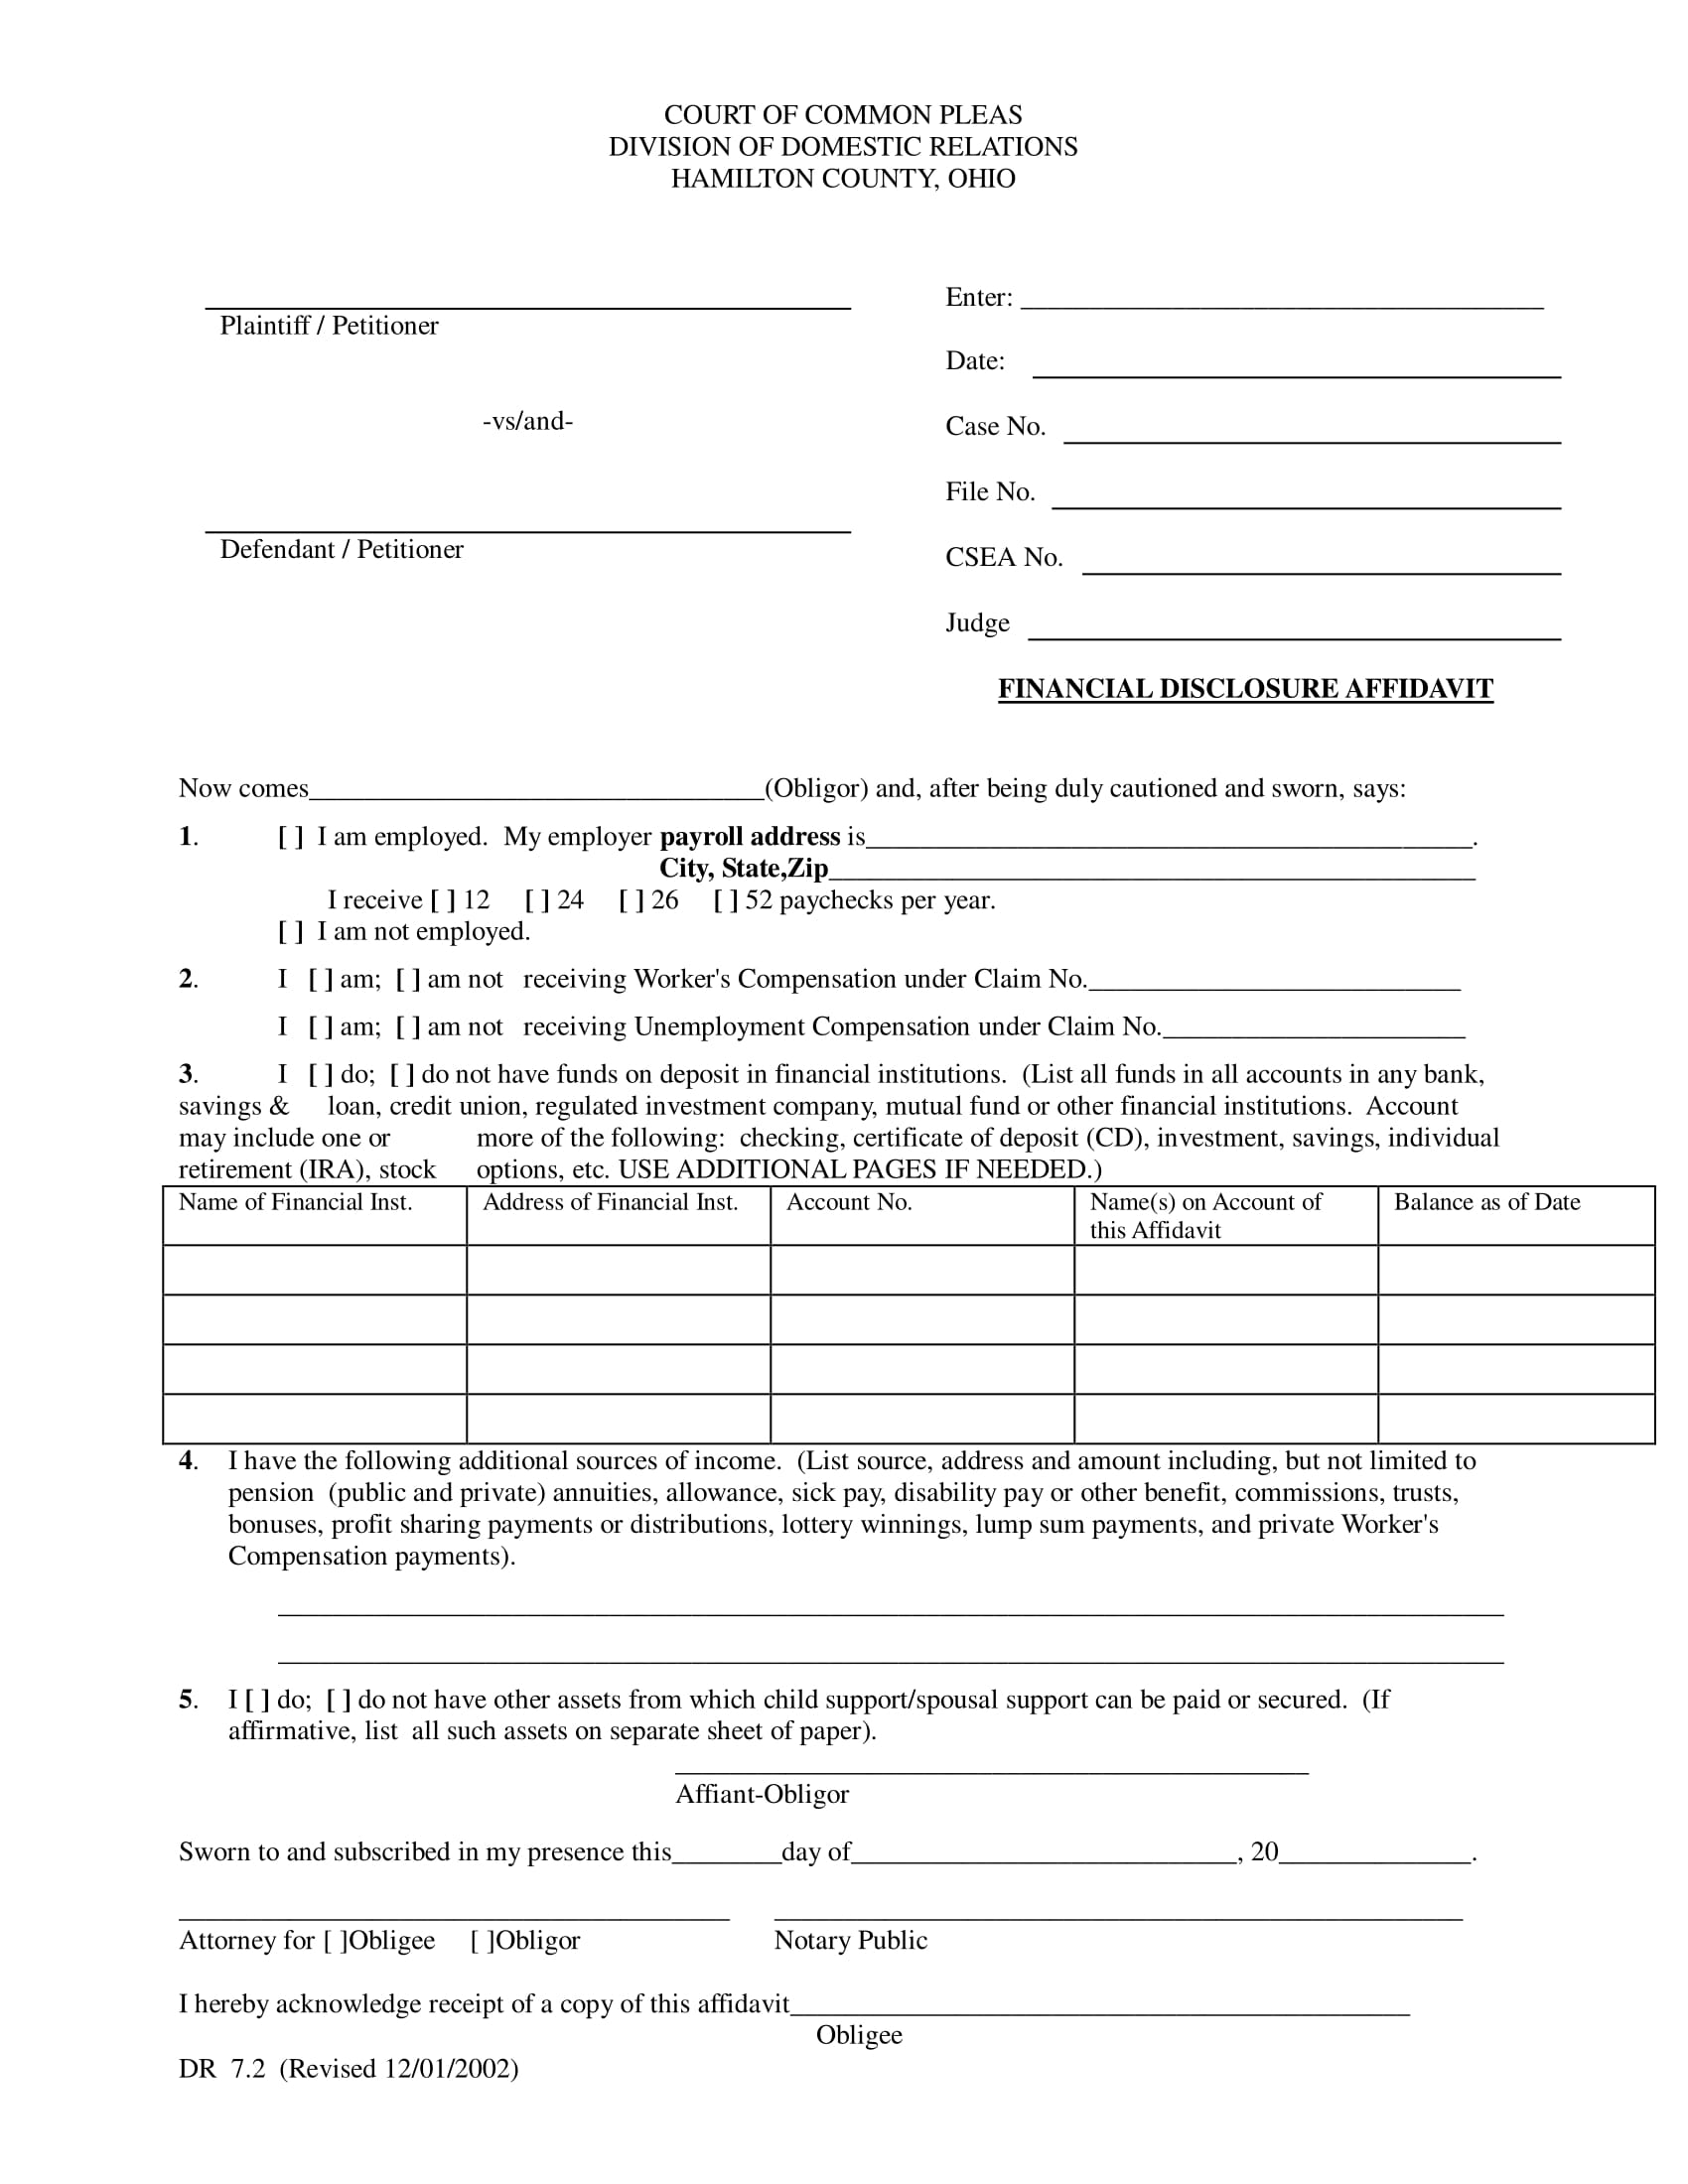 financial disclosure affidavit form 1